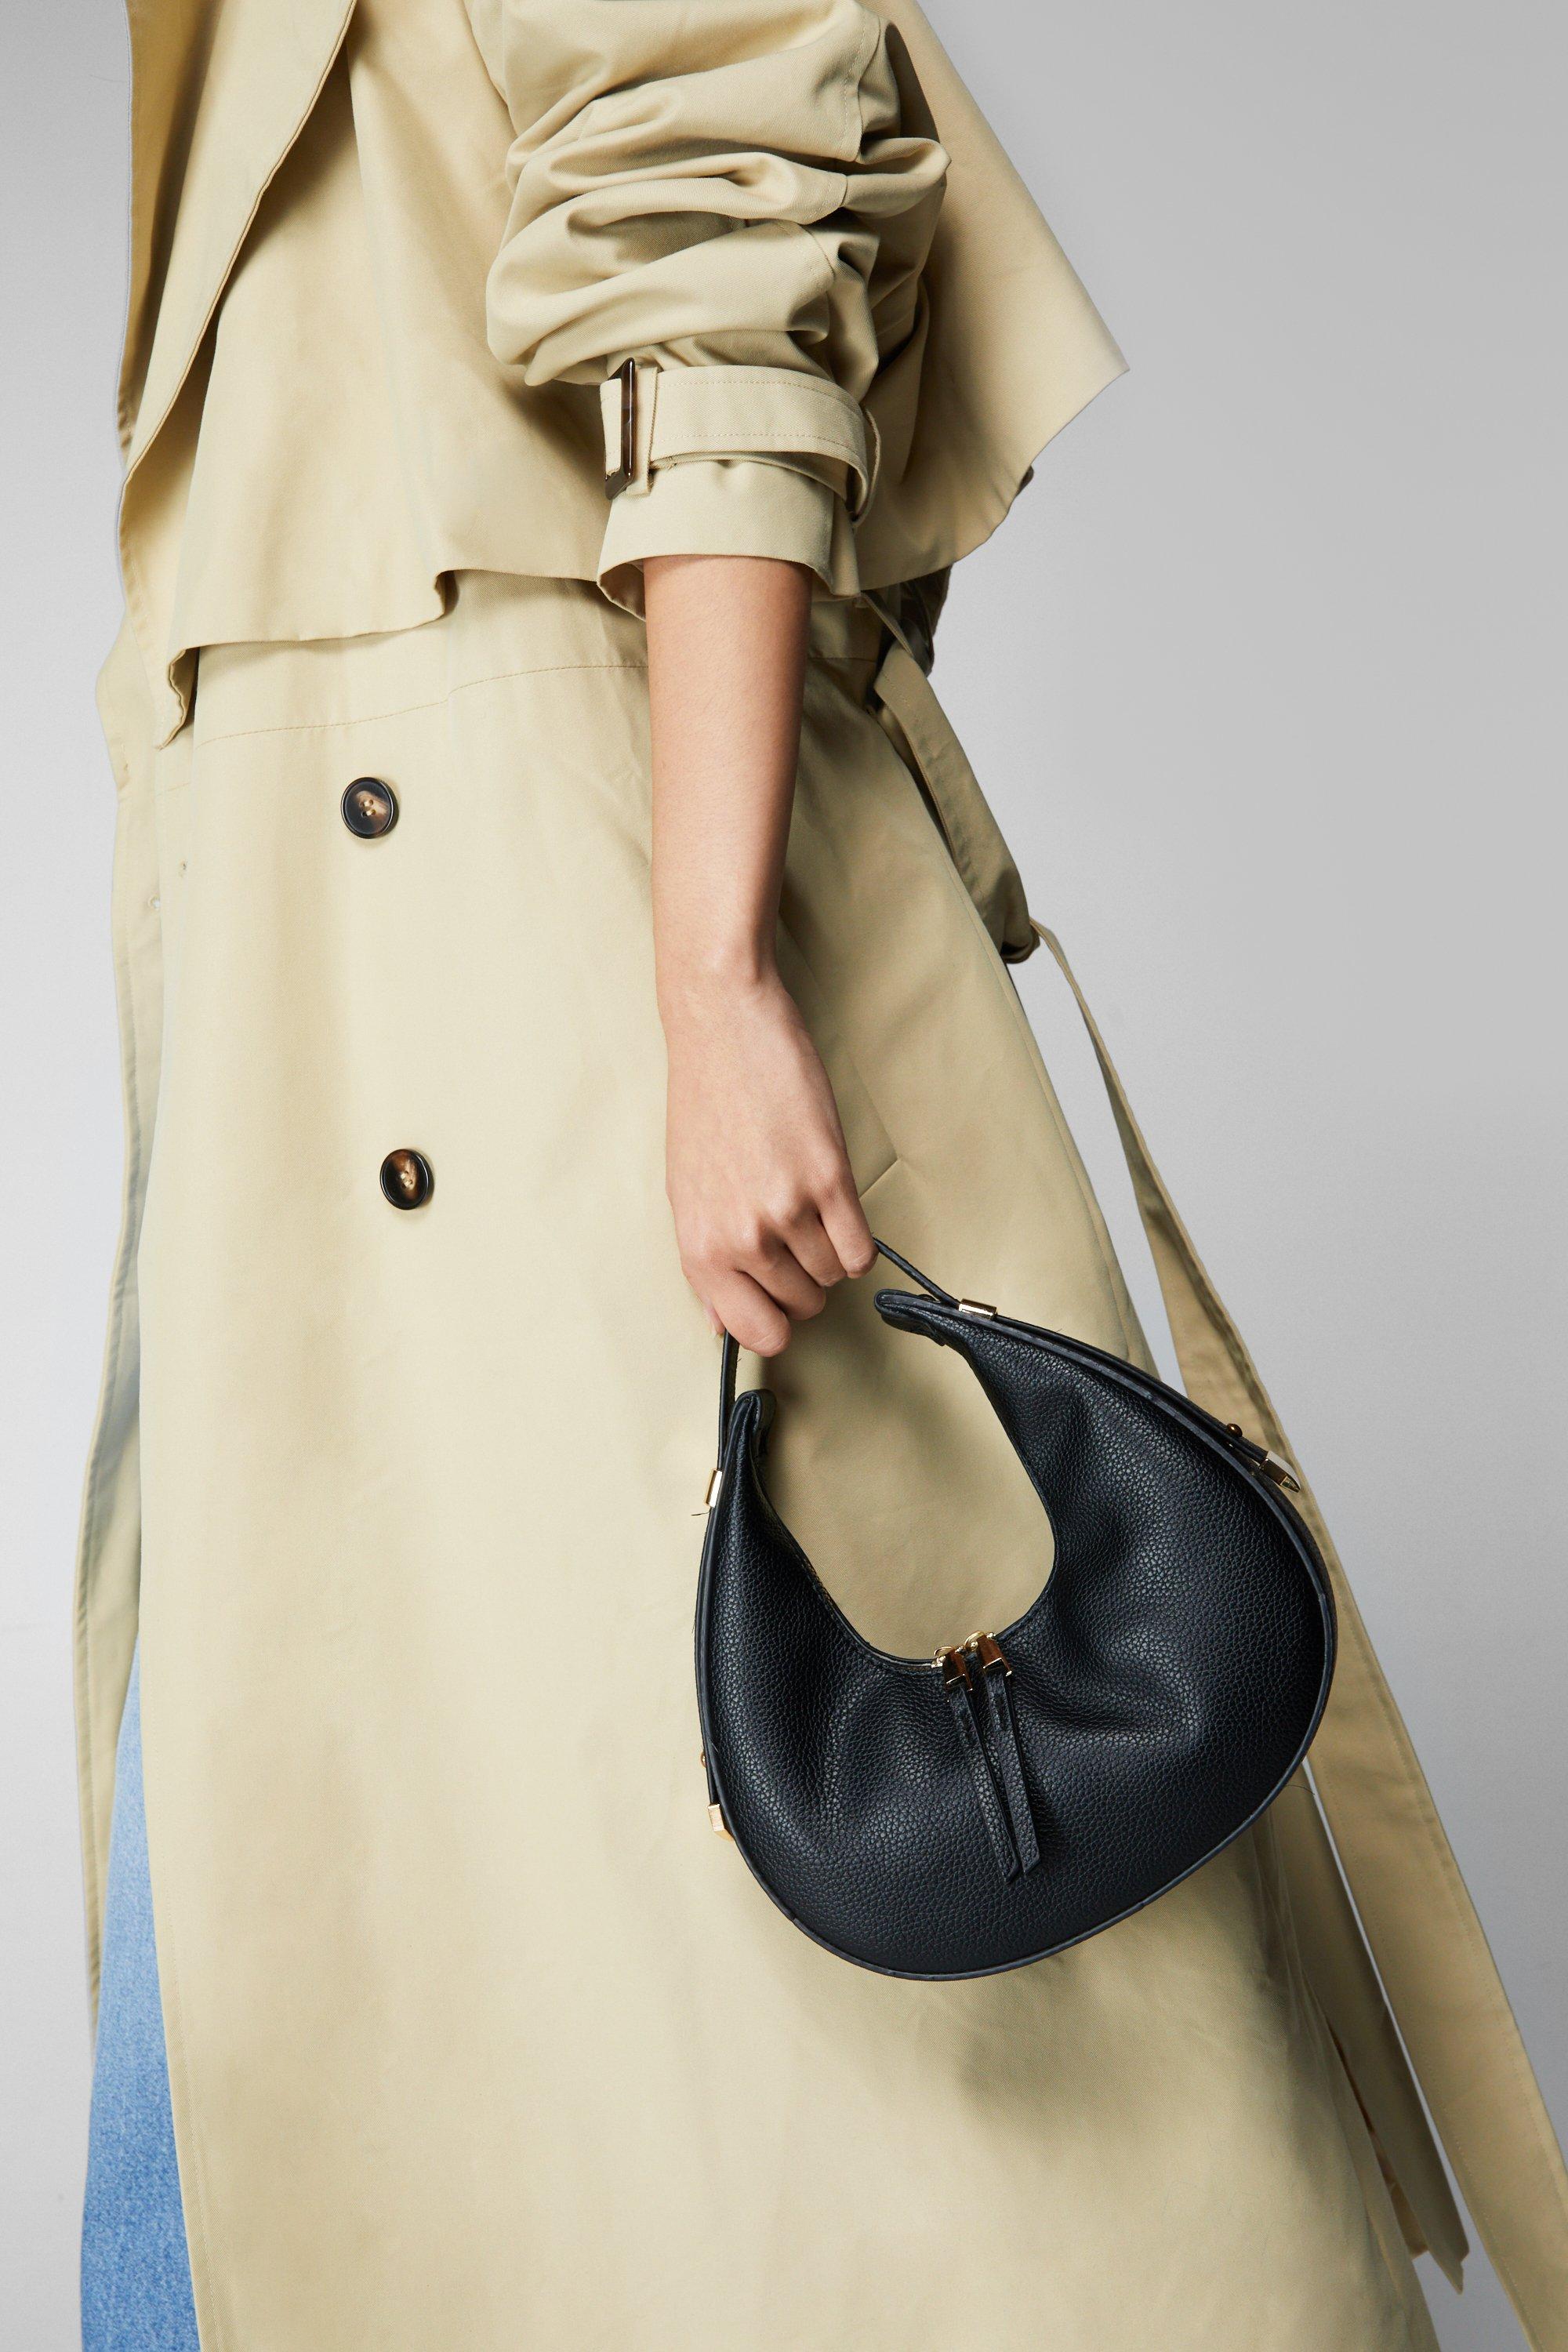 Great American Bags & Handbags for Women | eBay